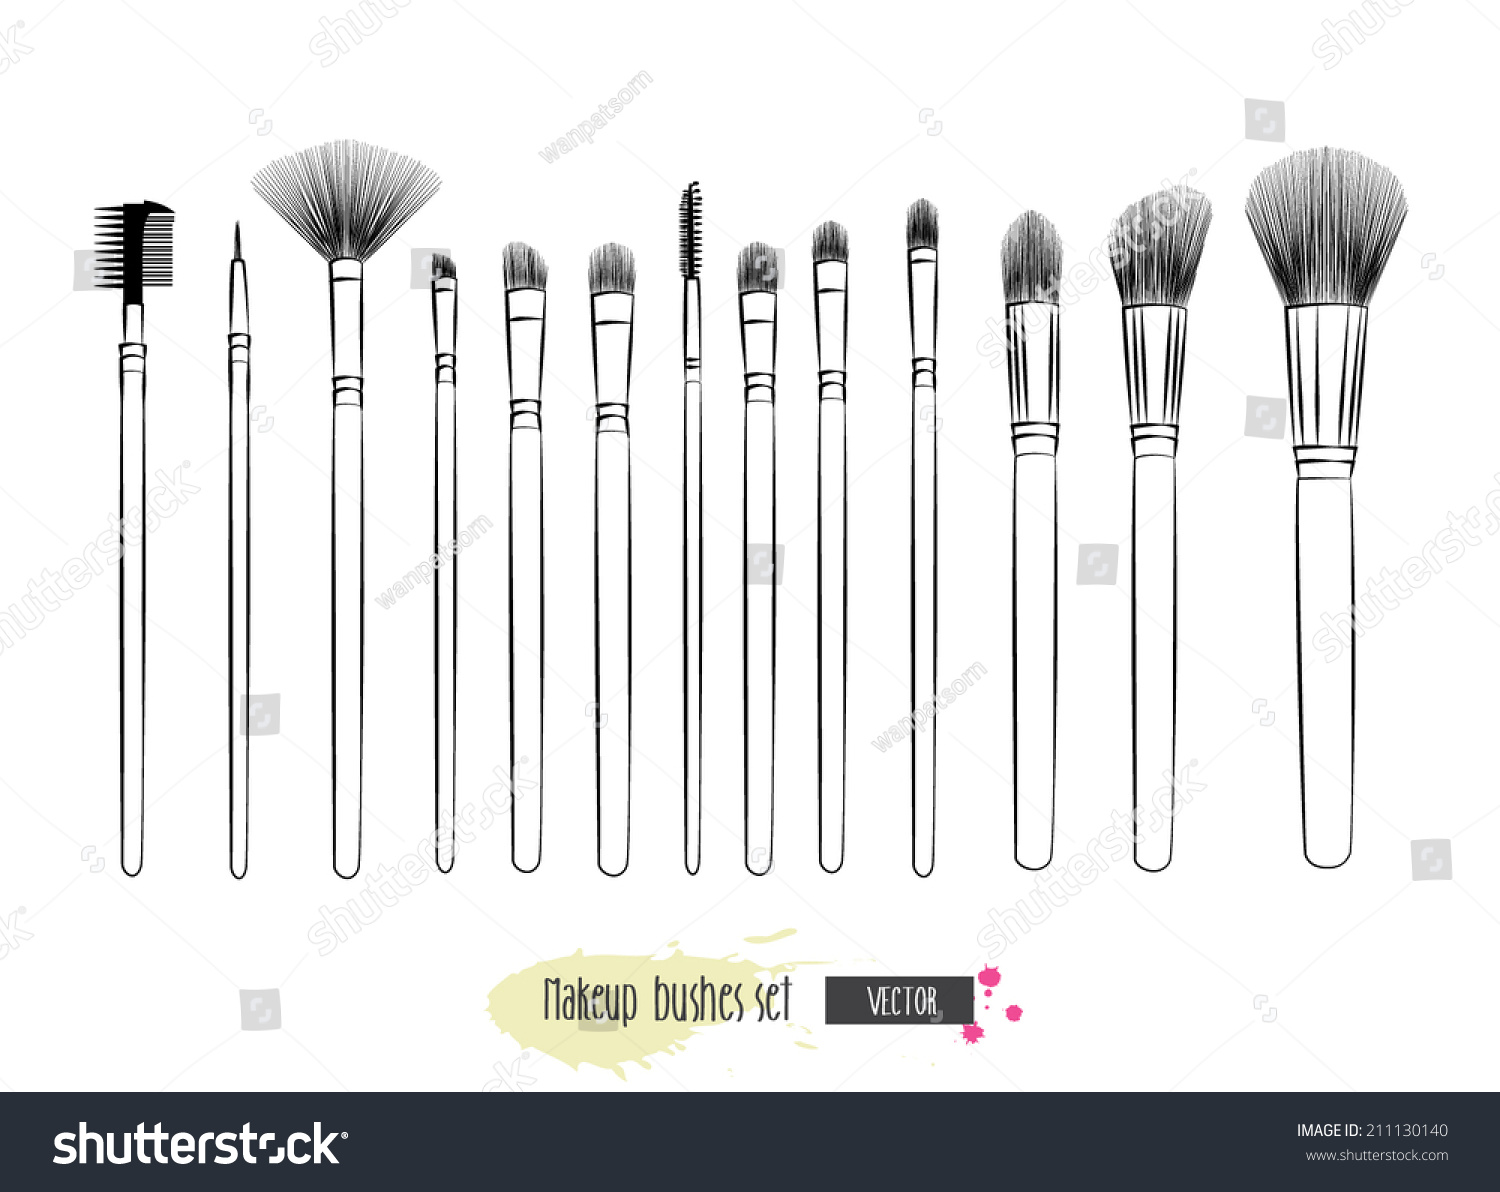 free clipart makeup brush - photo #25